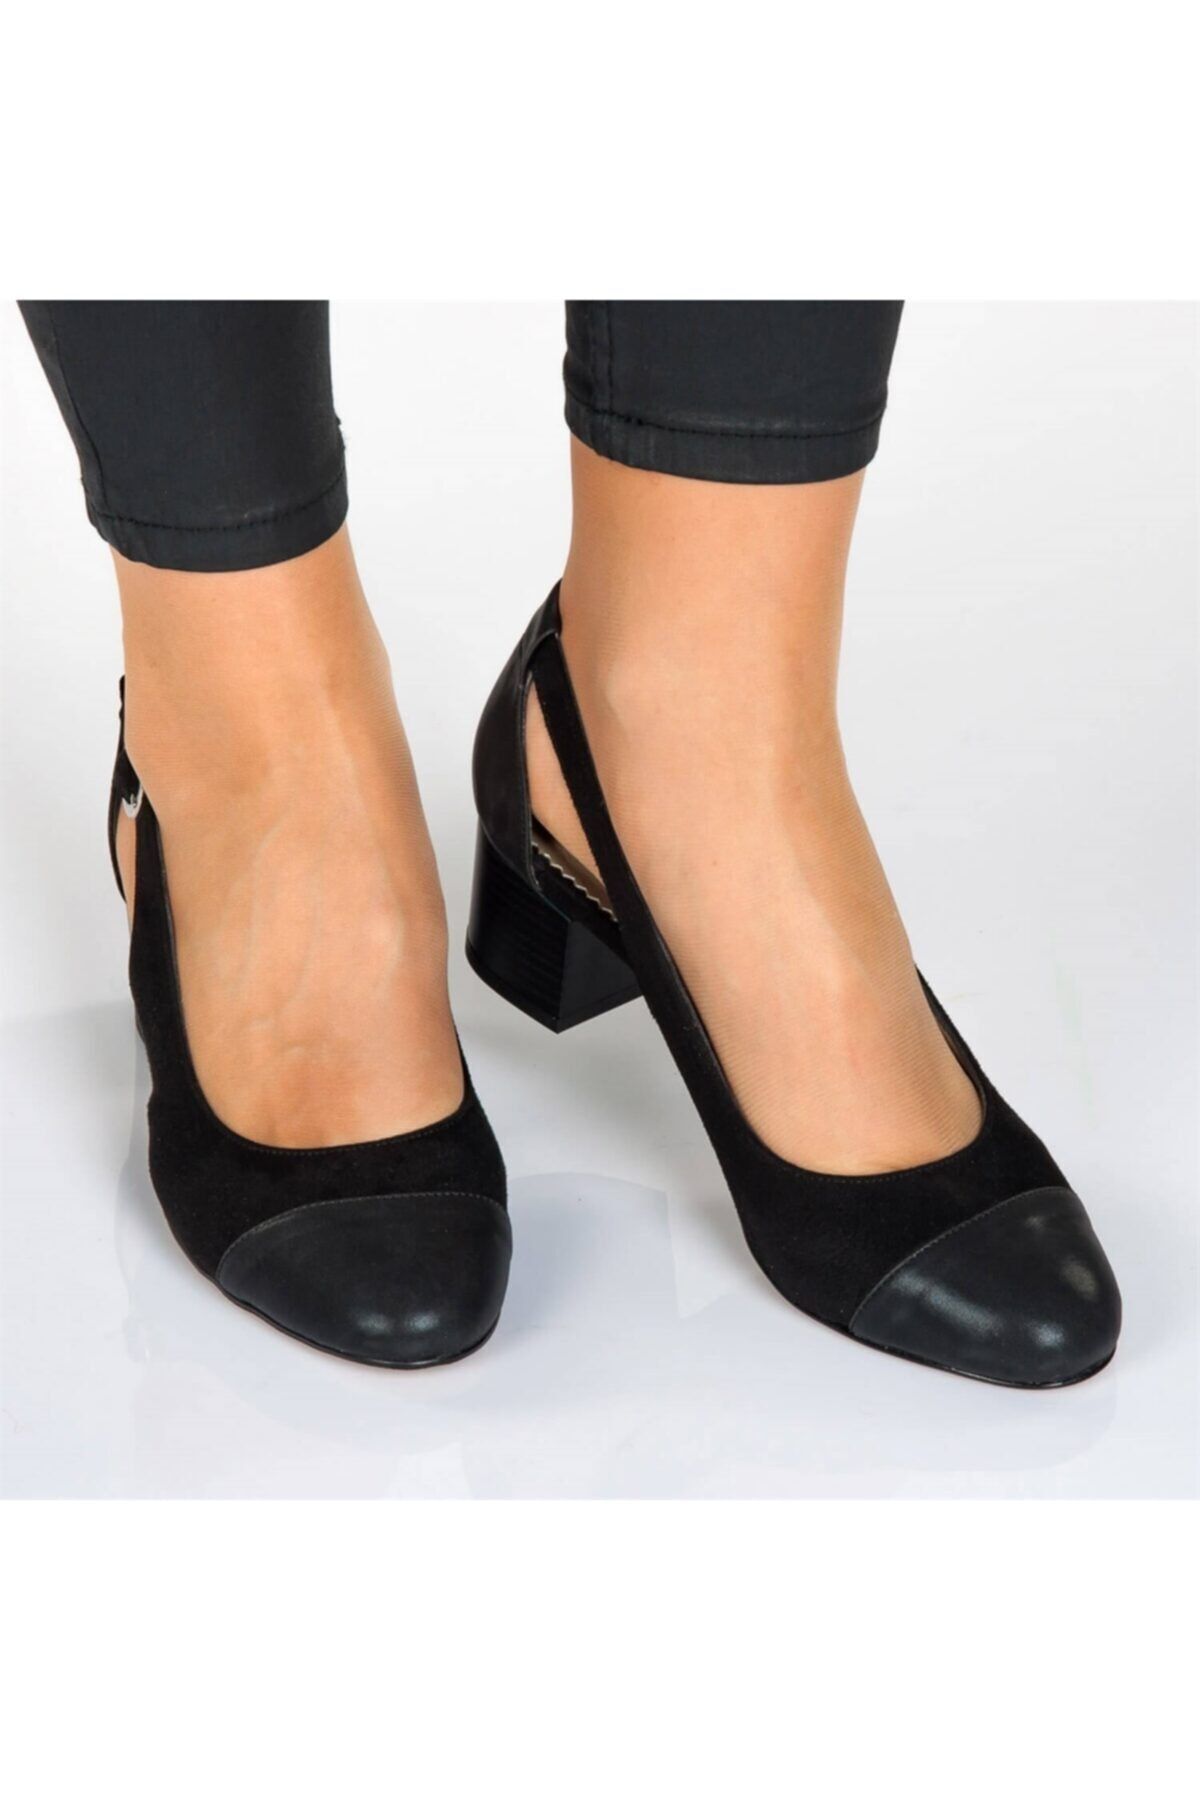 İriadam 15105 Siyah Süet Siyah Analin Büyük Numara Bayan Ayakkabılar